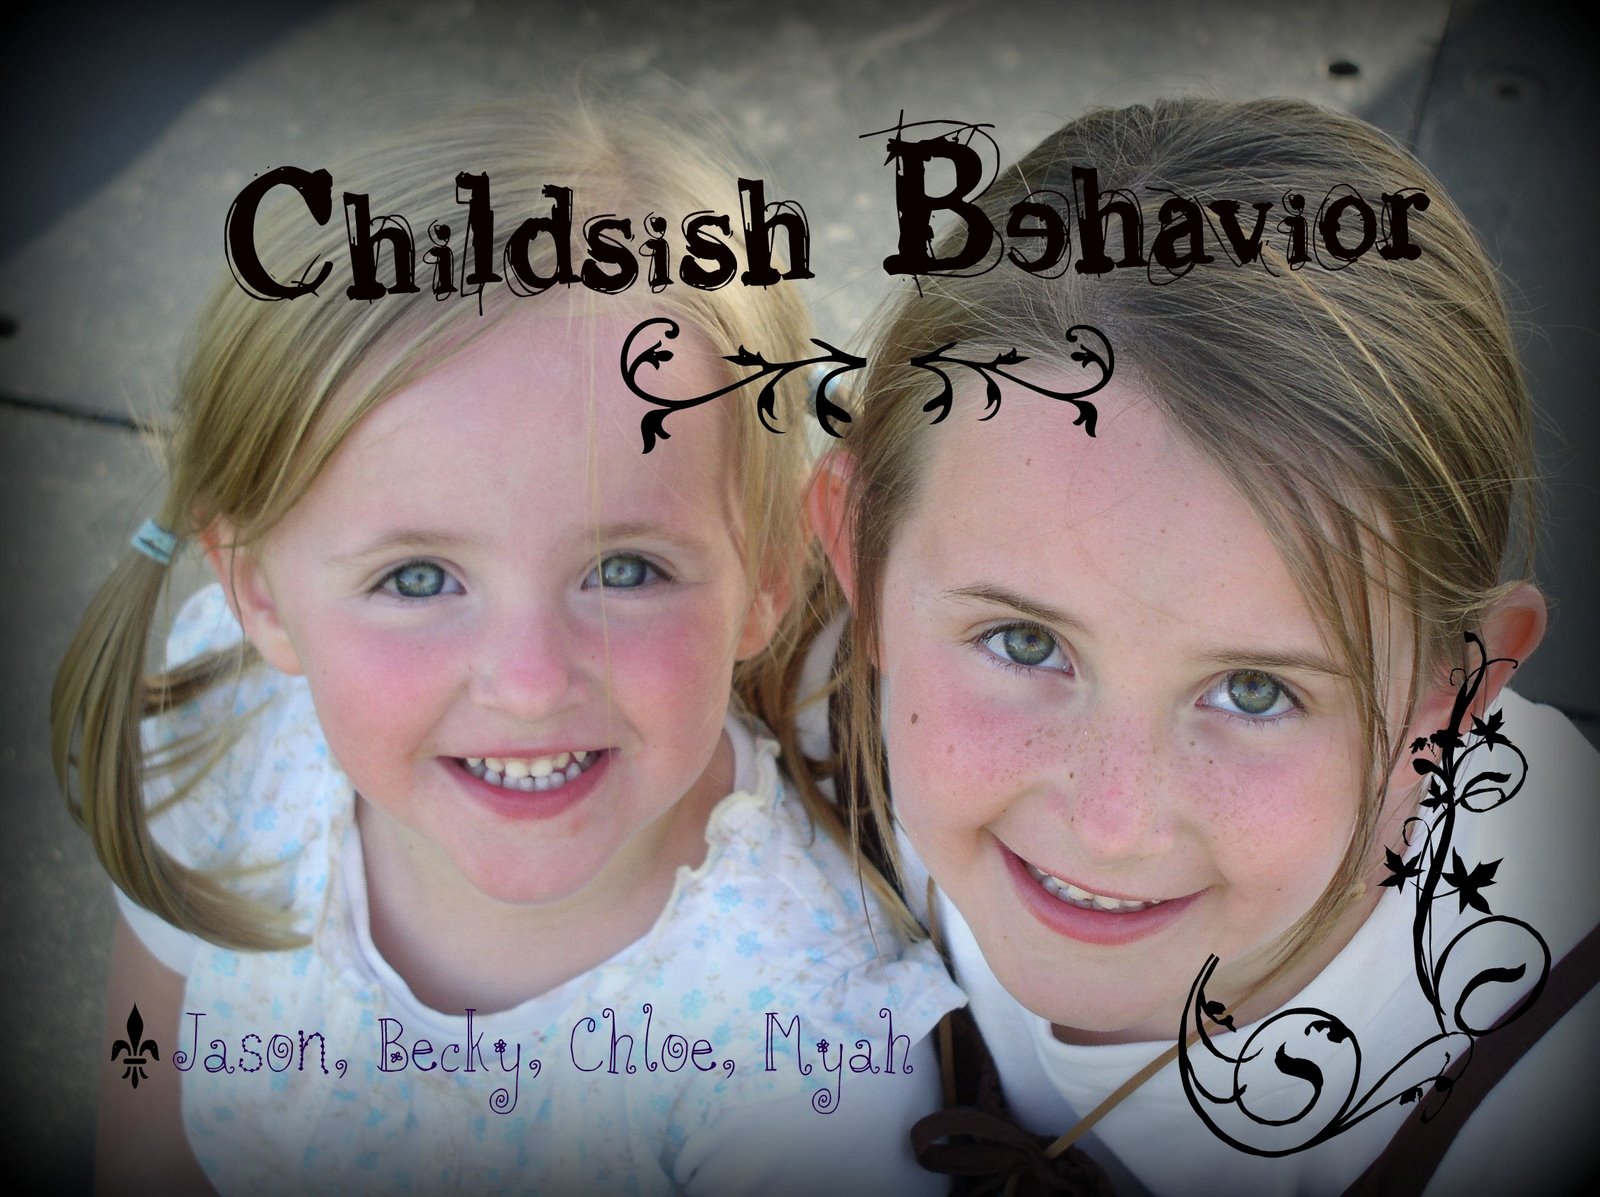 Childsish Behavior